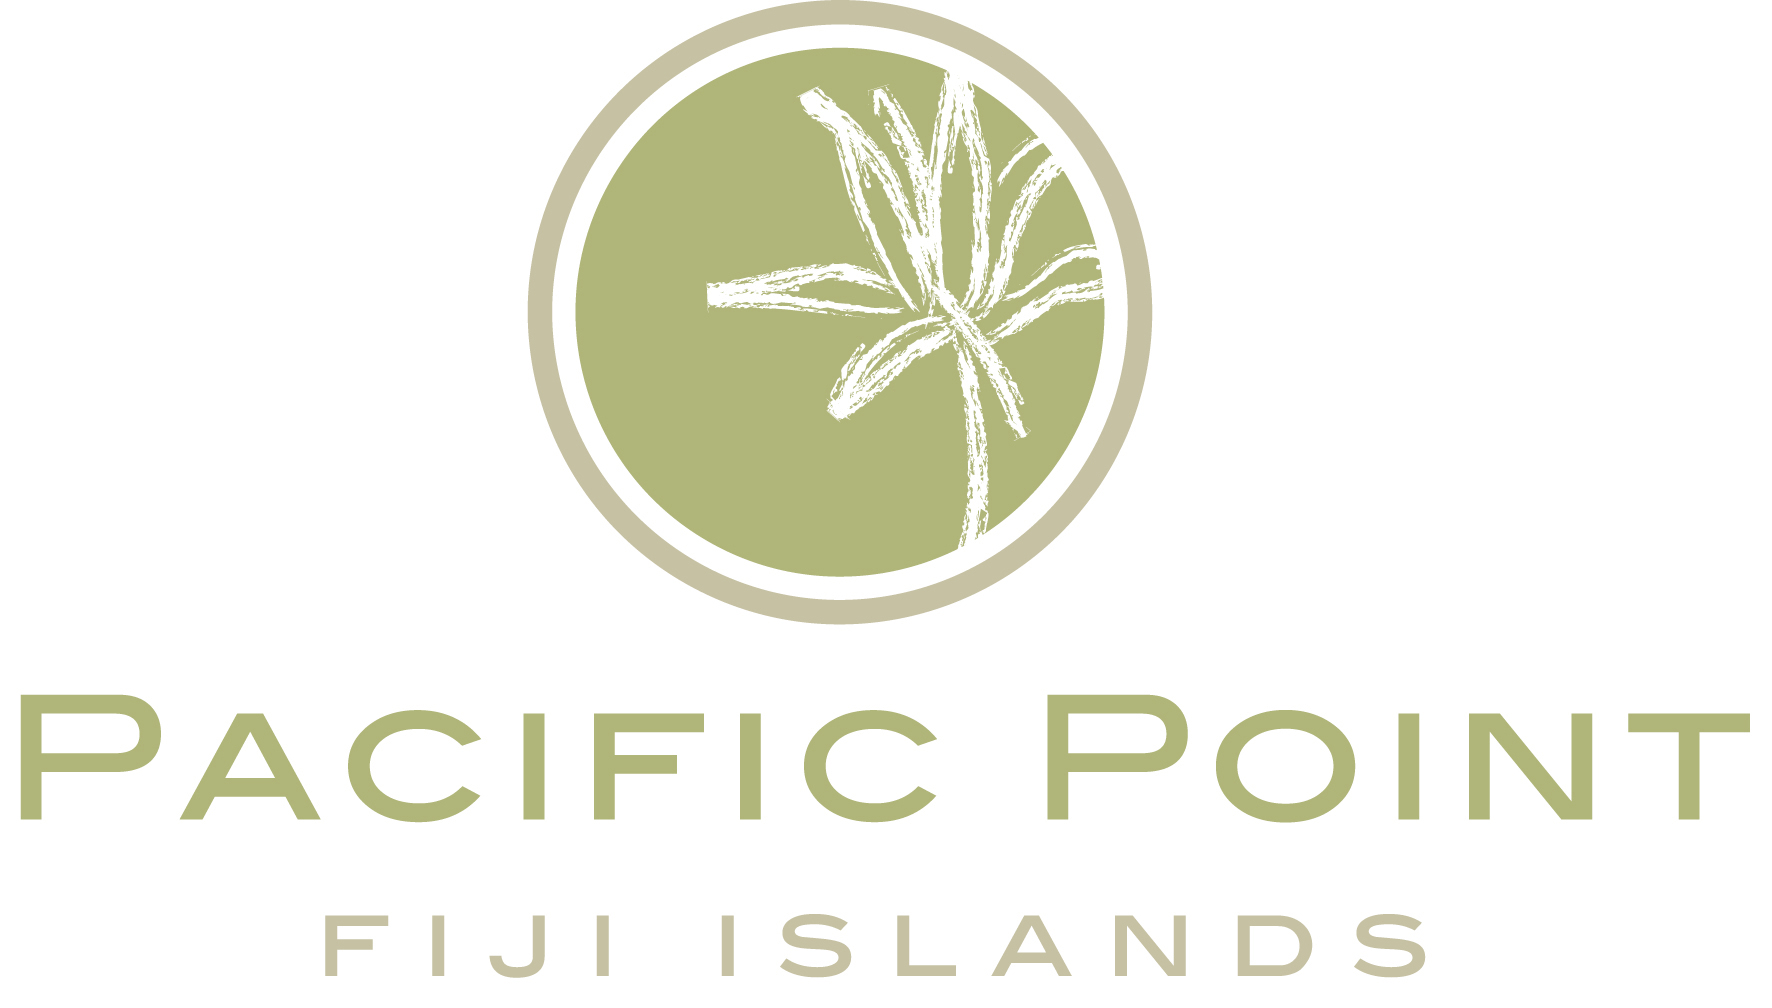 Pacific Point LOGO Green.jpg